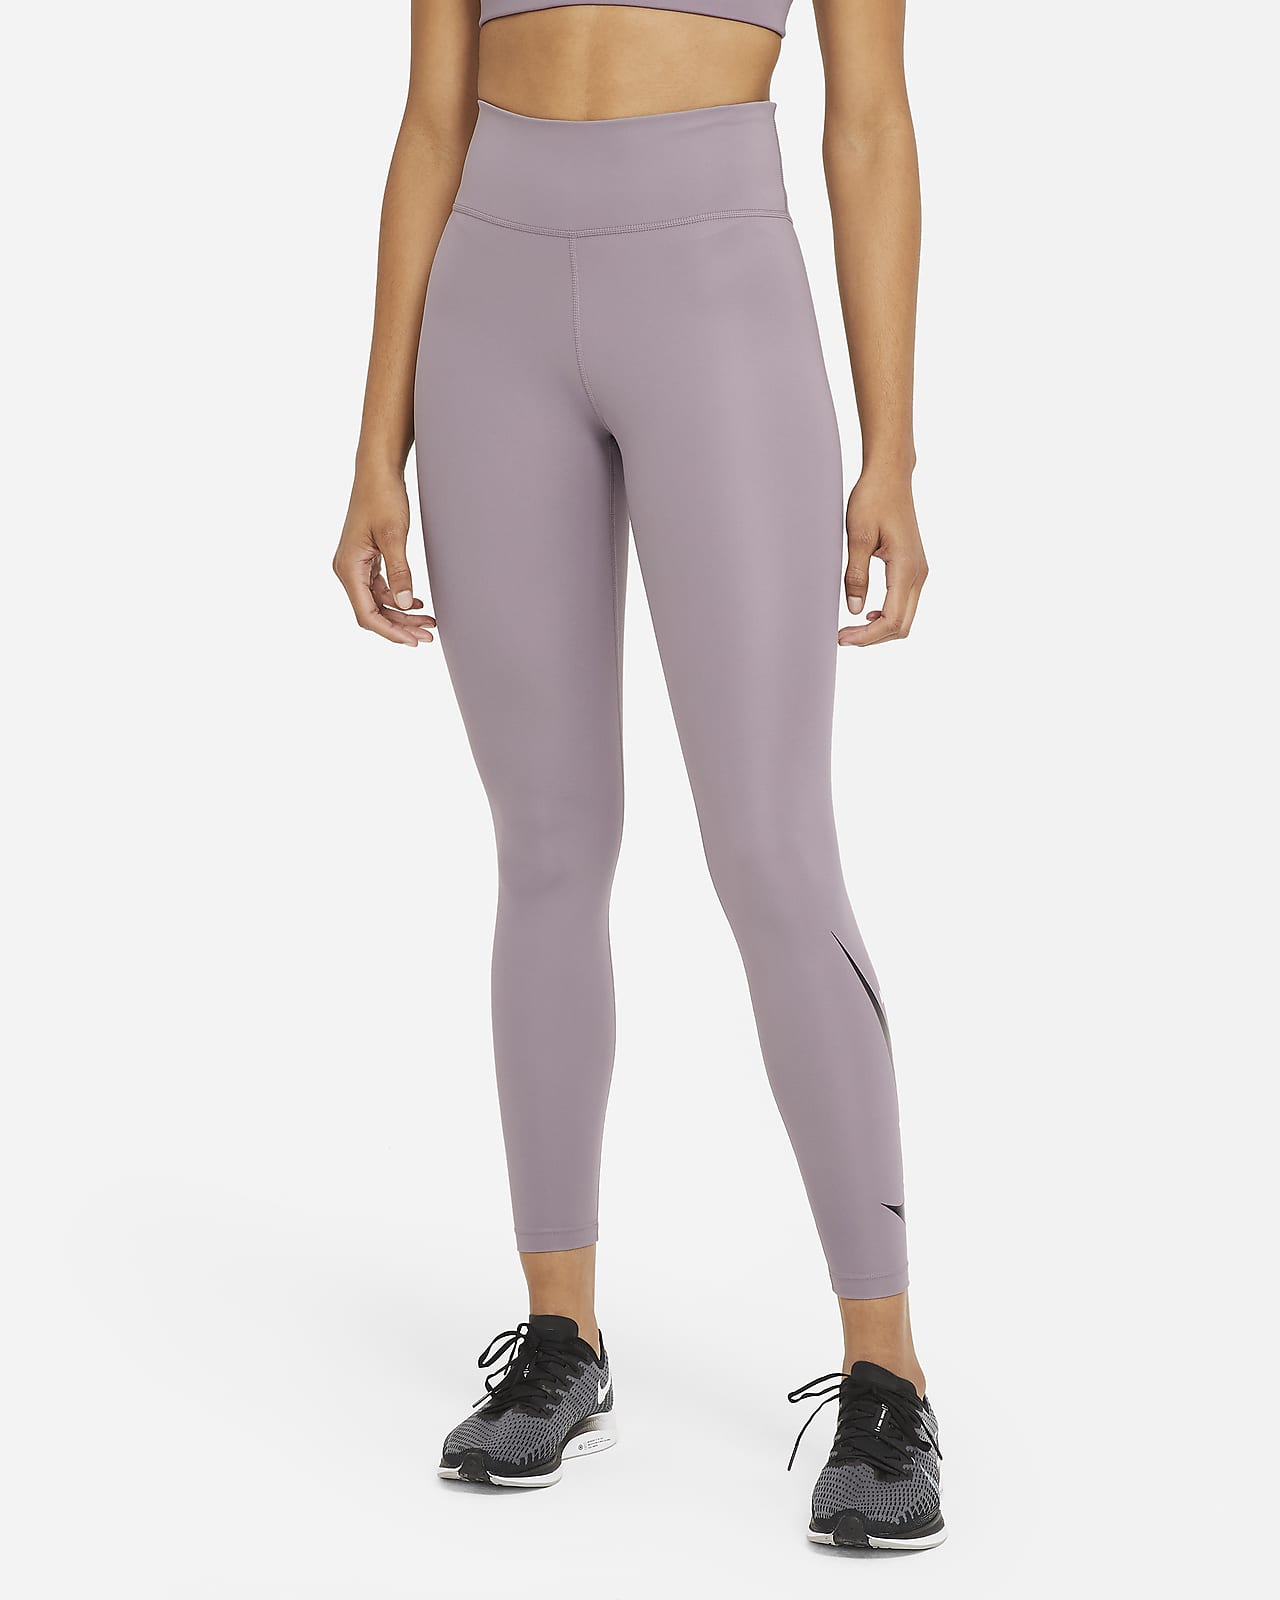 purple nike pro leggings